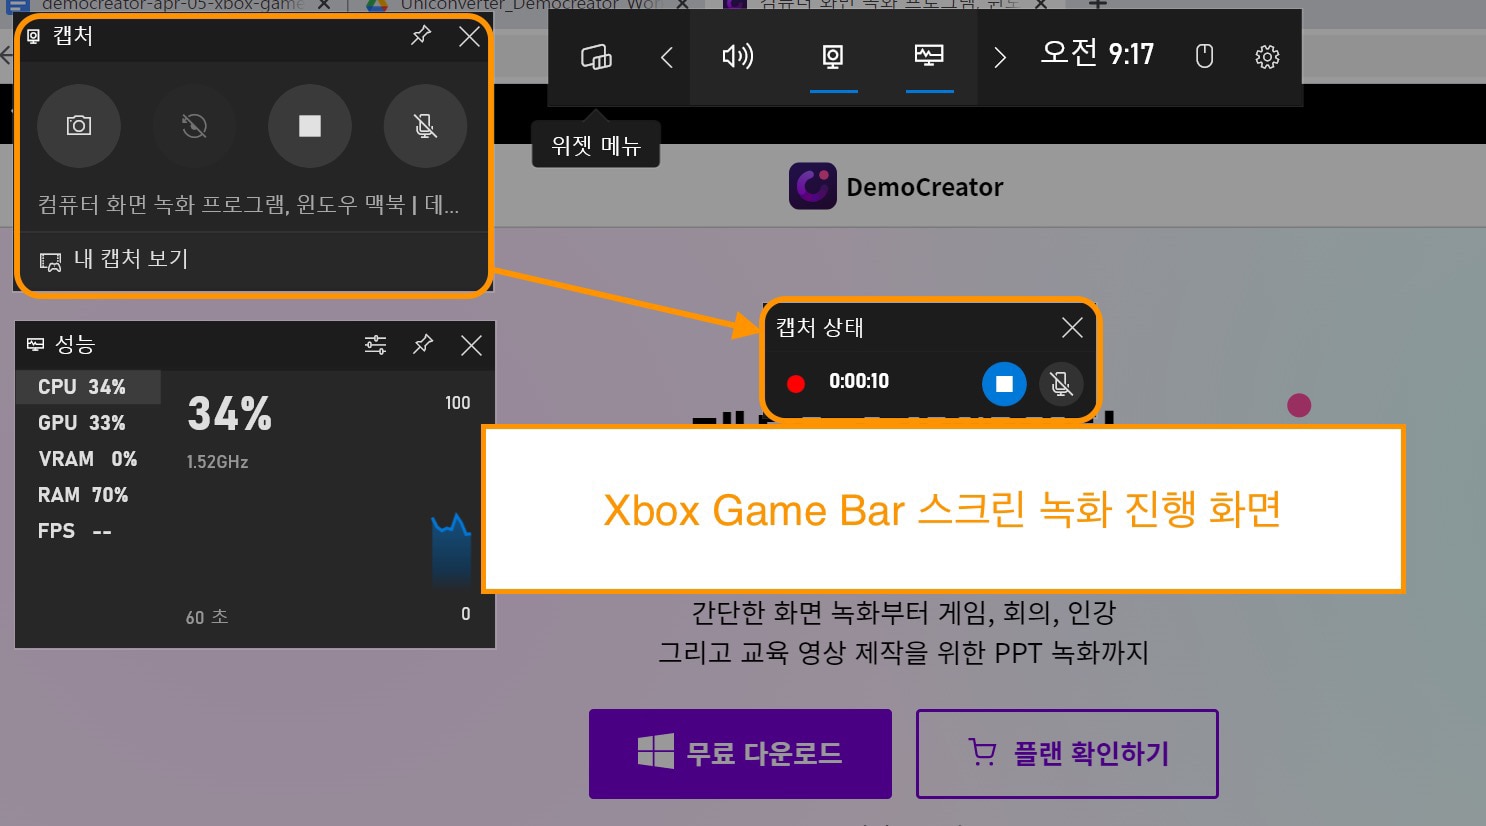 Xbox Game Bar 녹화 안됨